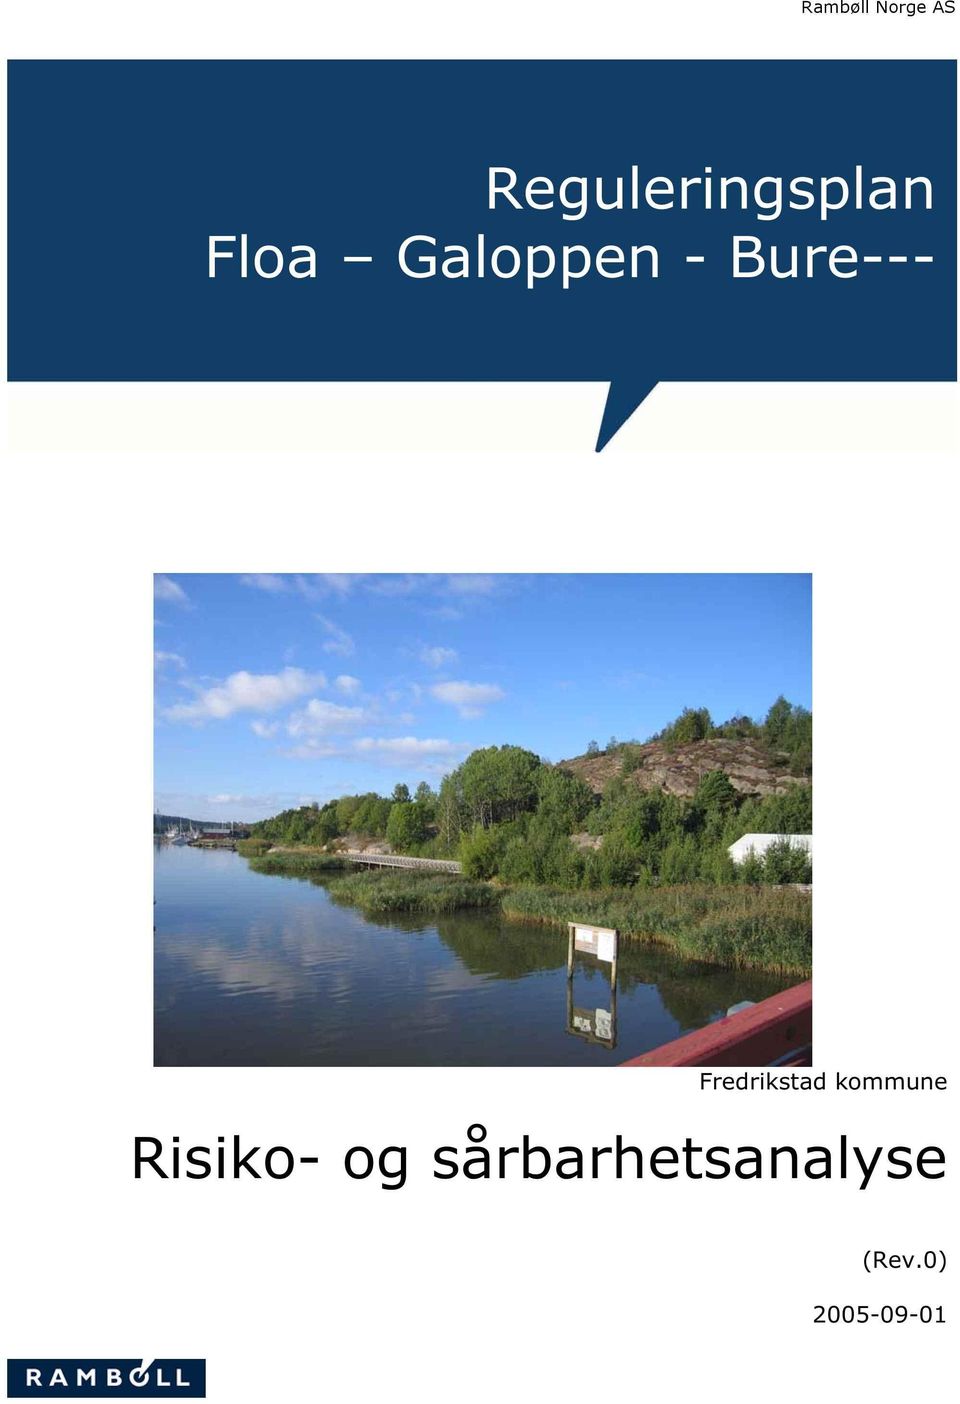 - Bure--- Fredrikstad kommune